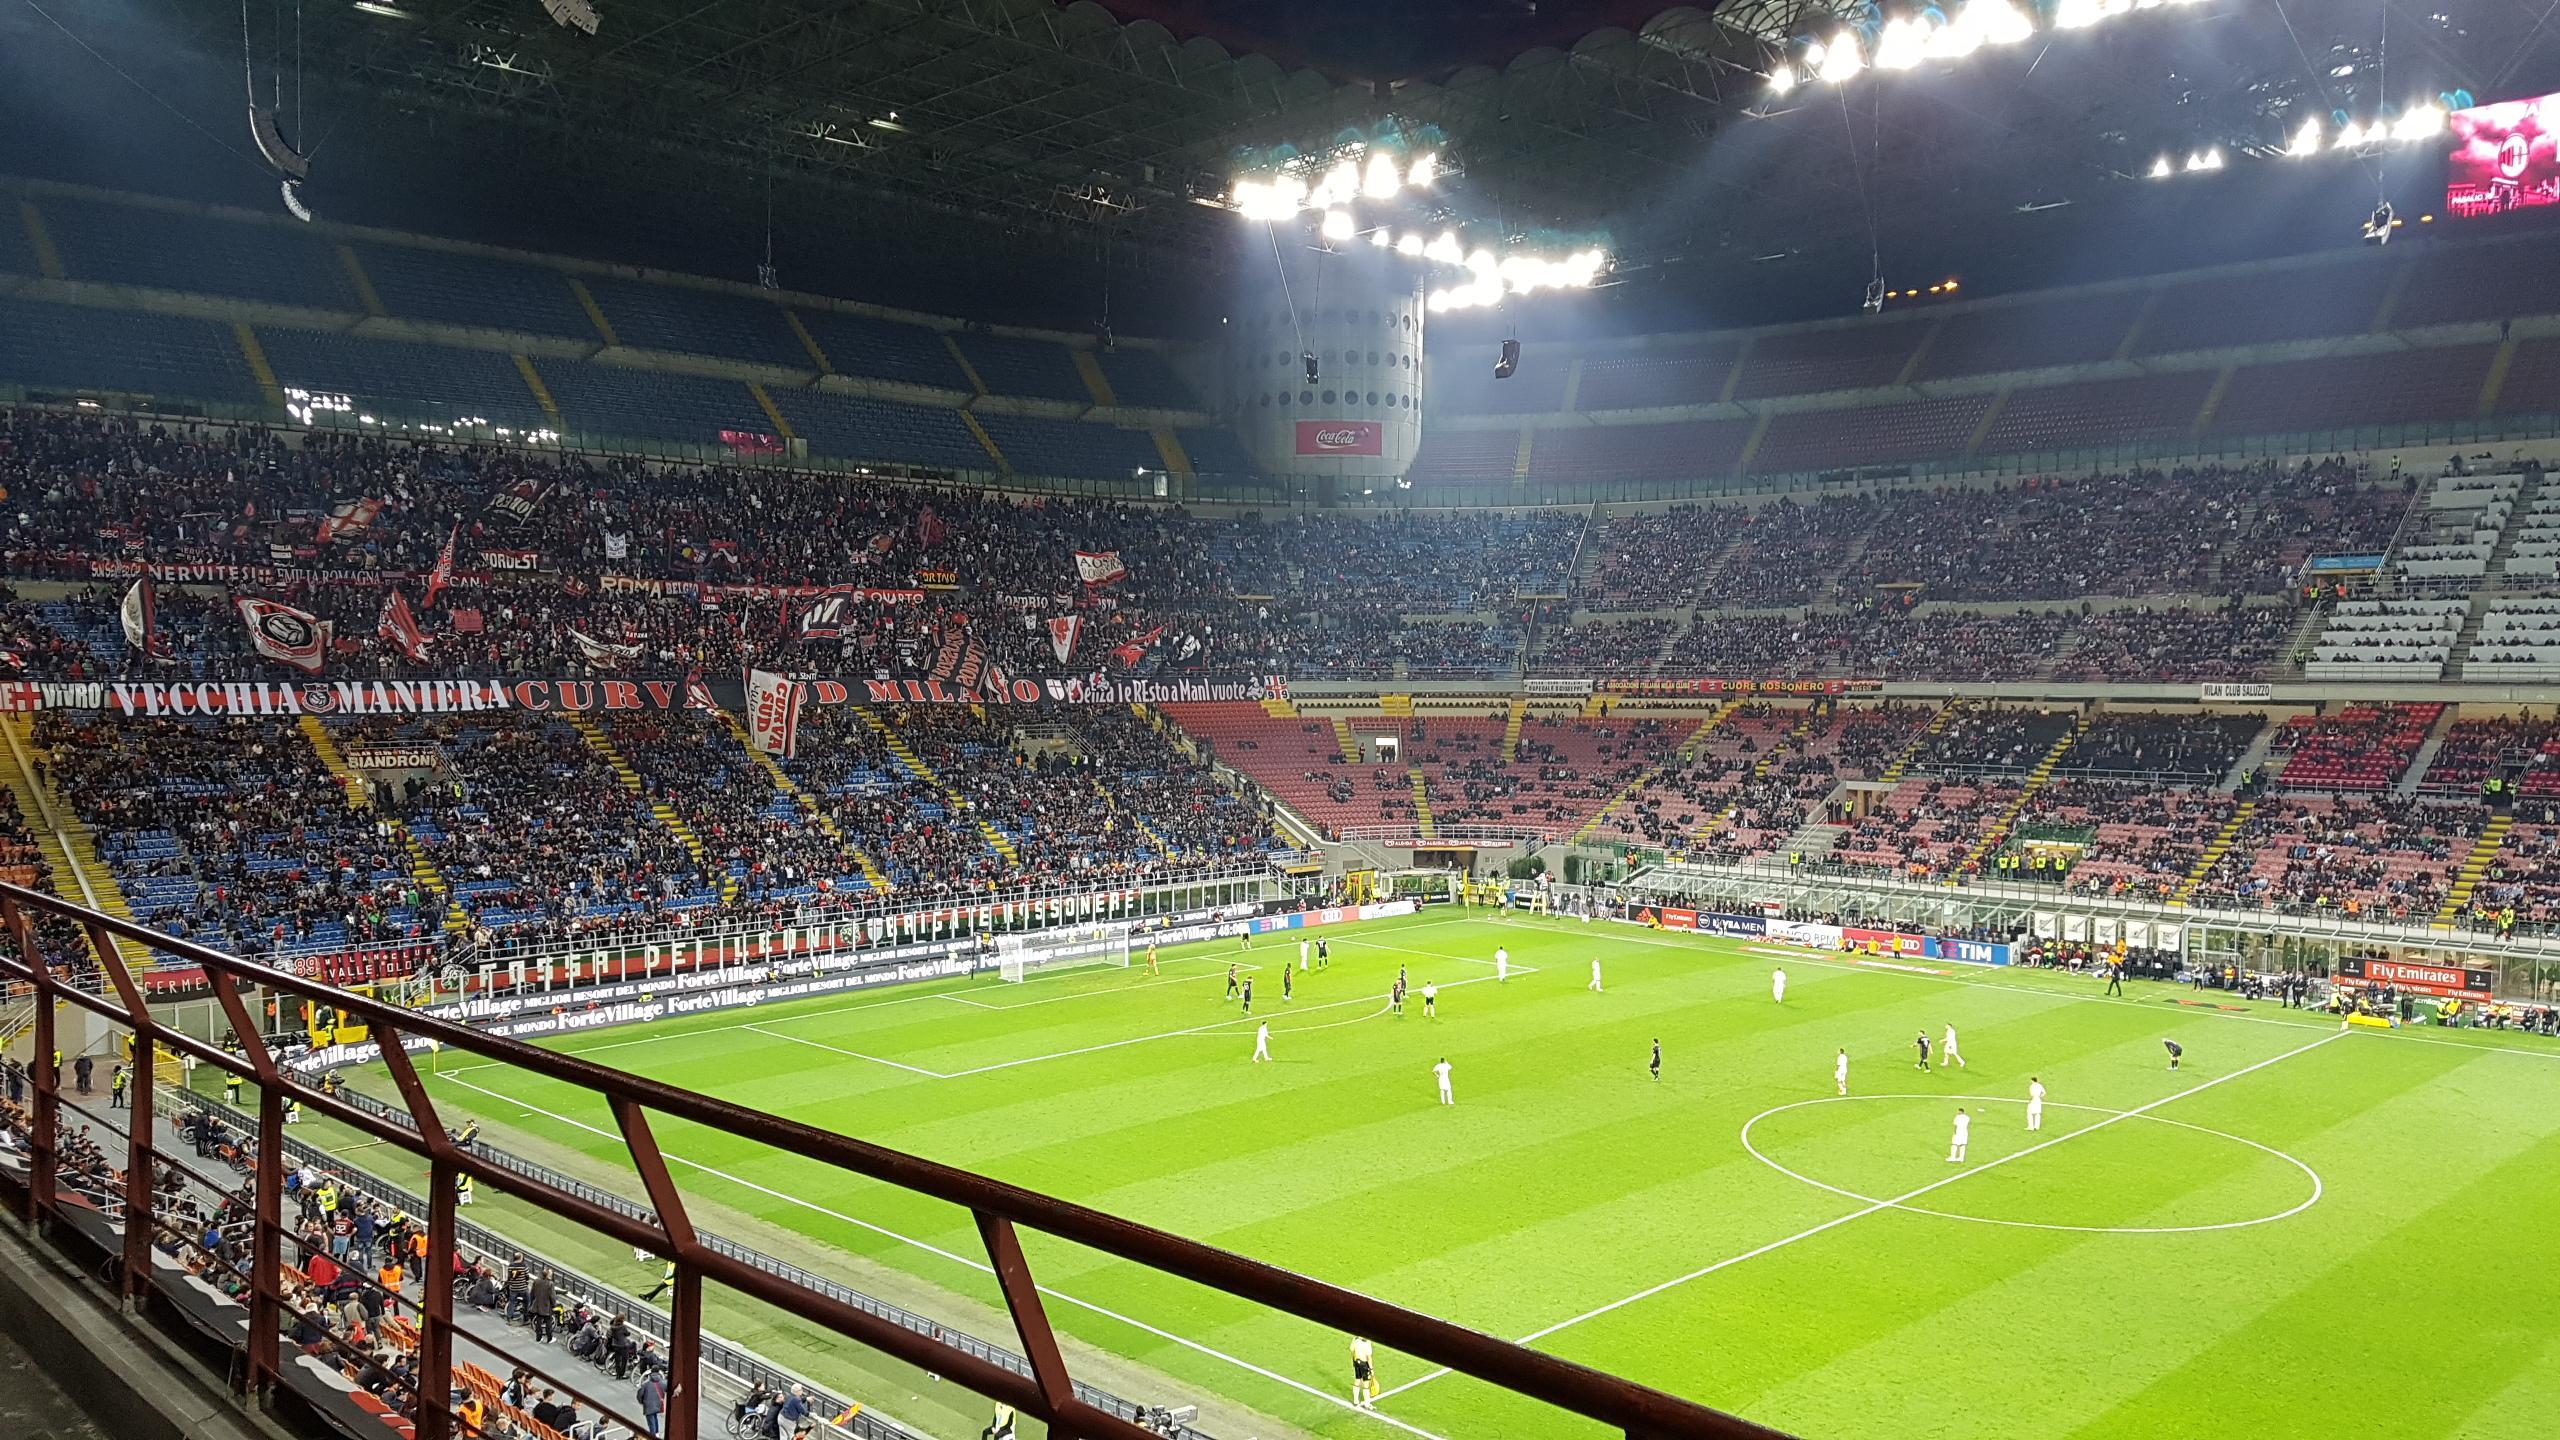 Stadio Giuseppe Meazza section 261 row 2 seat 14 Milan vs AS